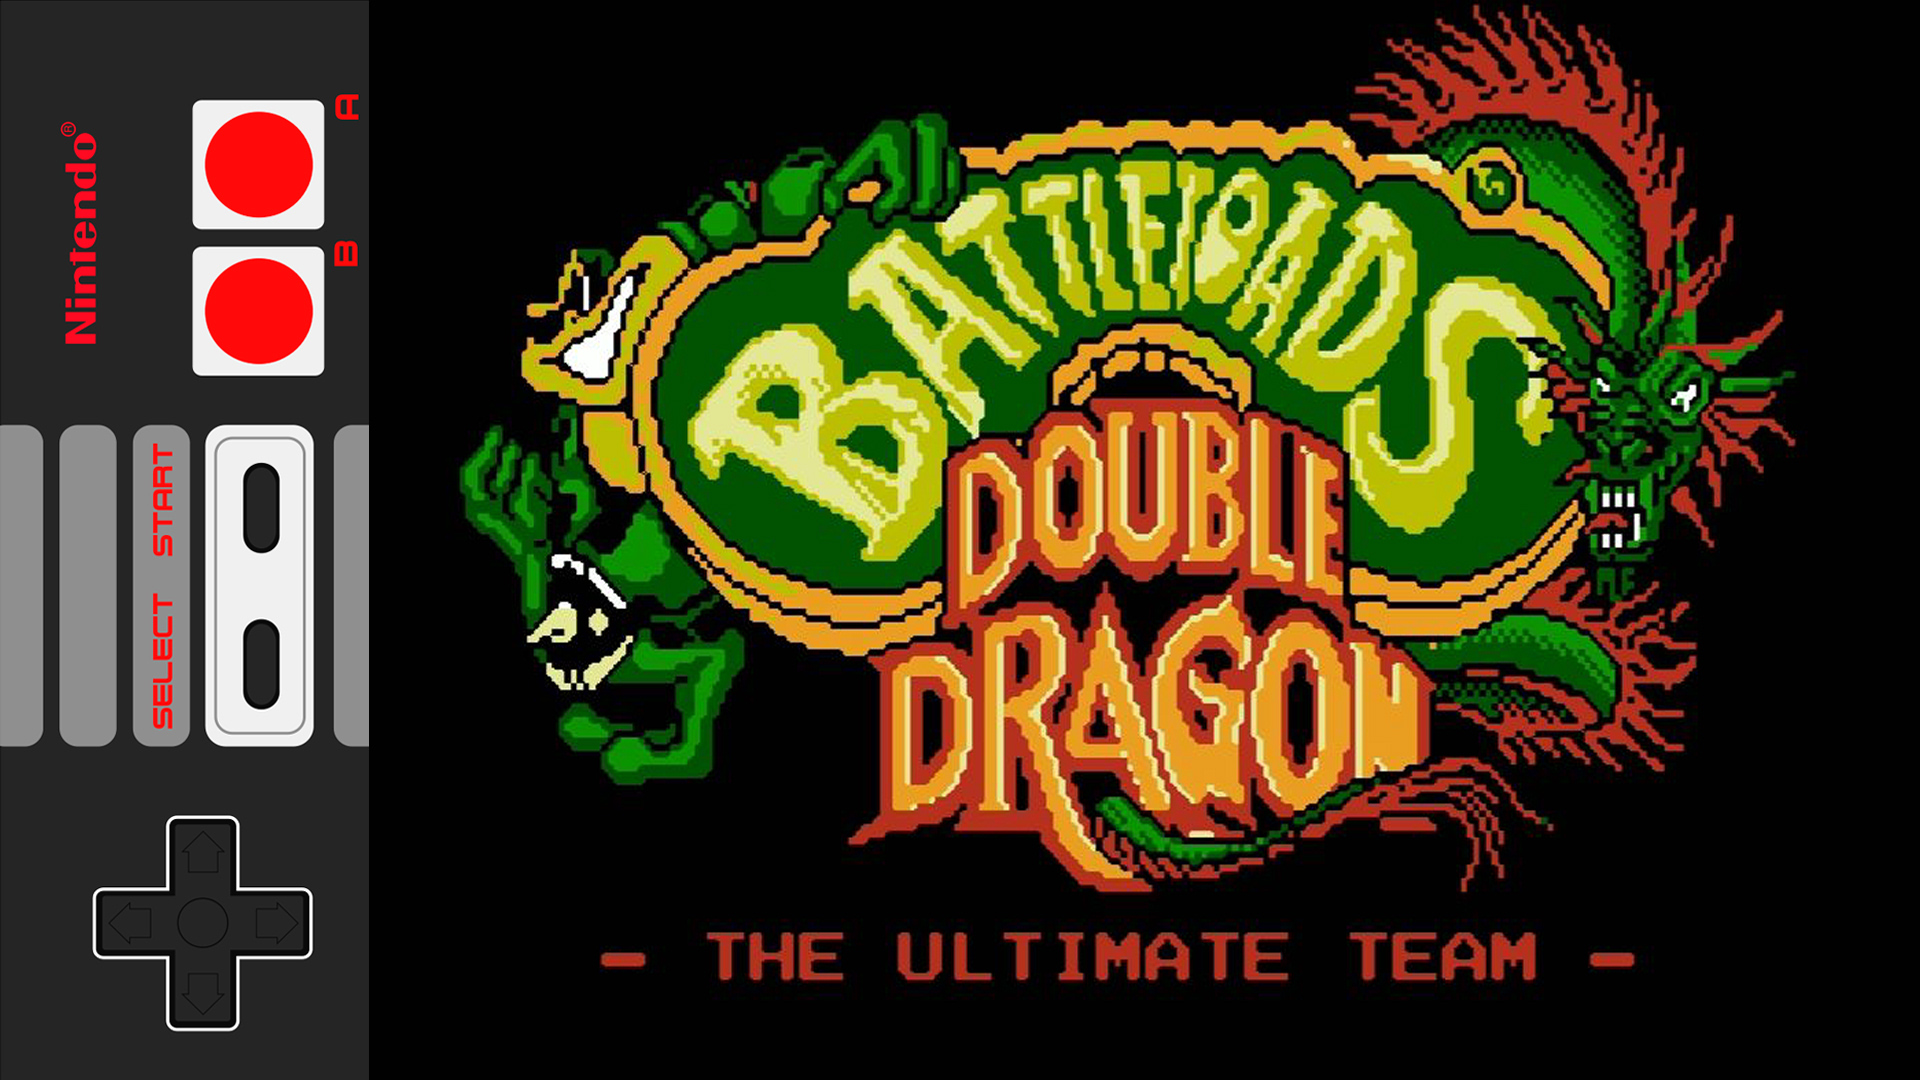 Battletoads ultimate team. Battletoads Double Dragon the Ultimate Team NES. Battletoads & Double Dragon - the Ultimate Team. Battletoads Double Dragon Денди. Battletoads Double Dragon Sega.